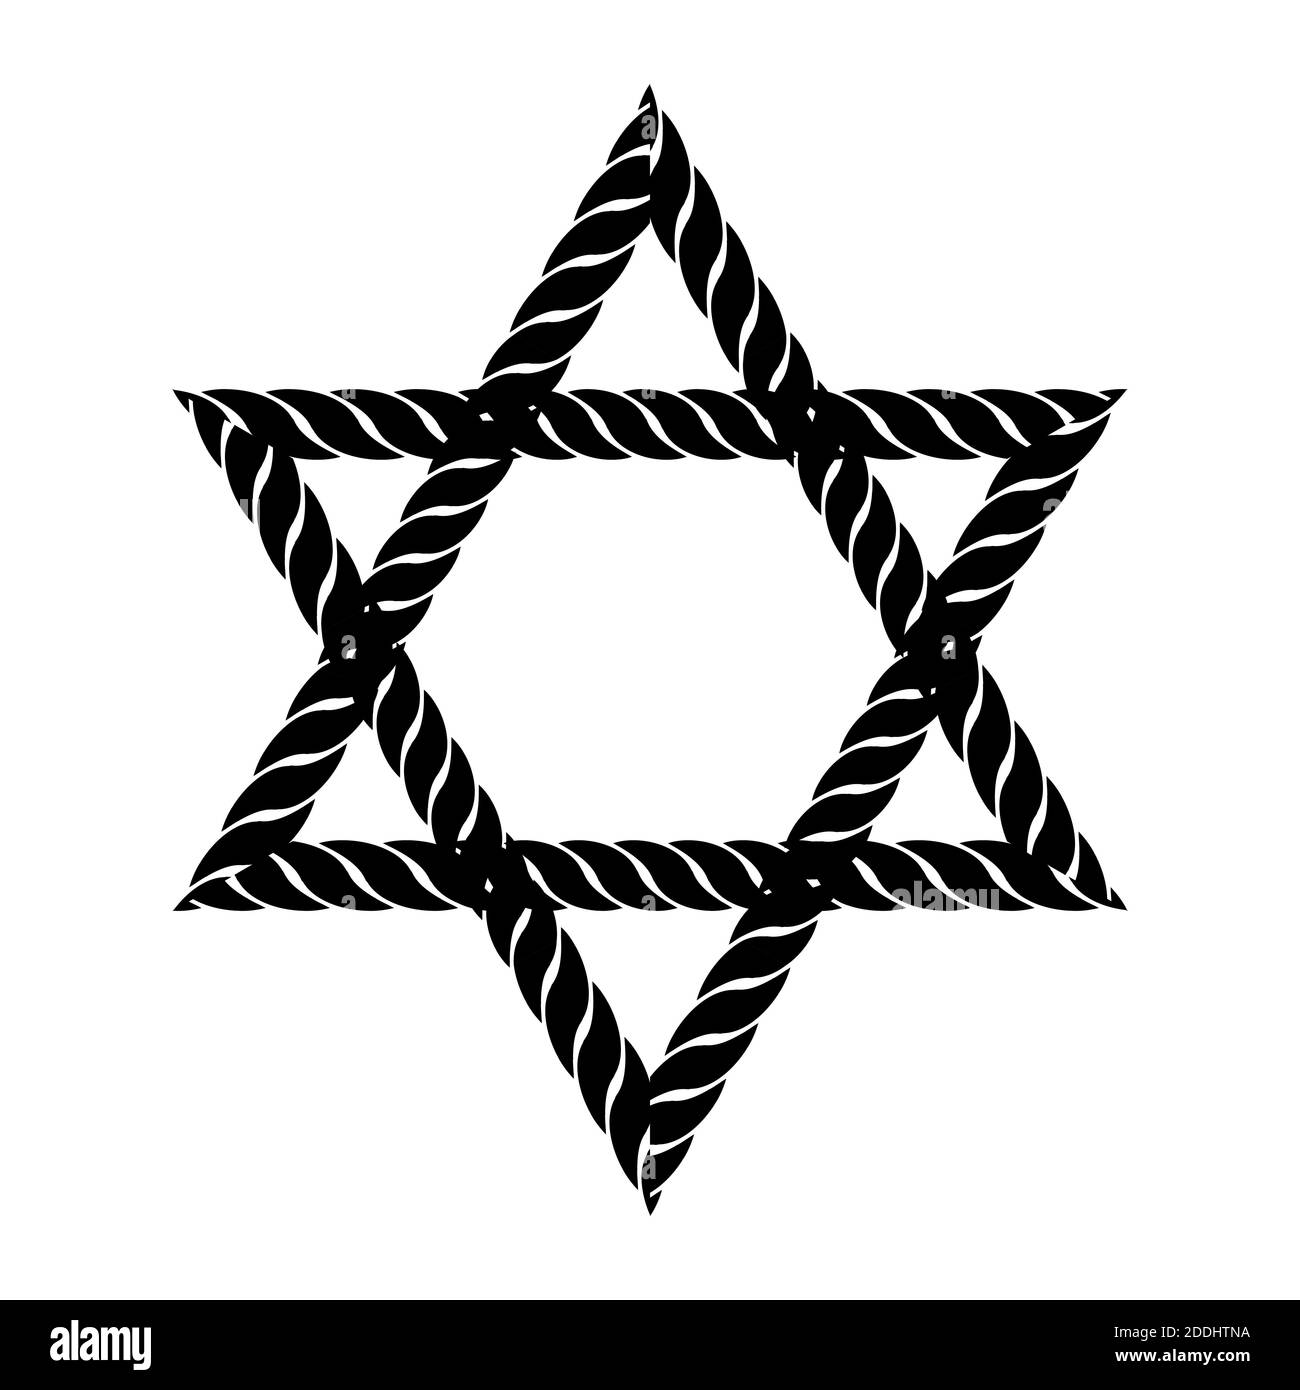 Star of David Jewish symbol. Black rope frame Israeli sign isolated vector illustration. Stock Vector